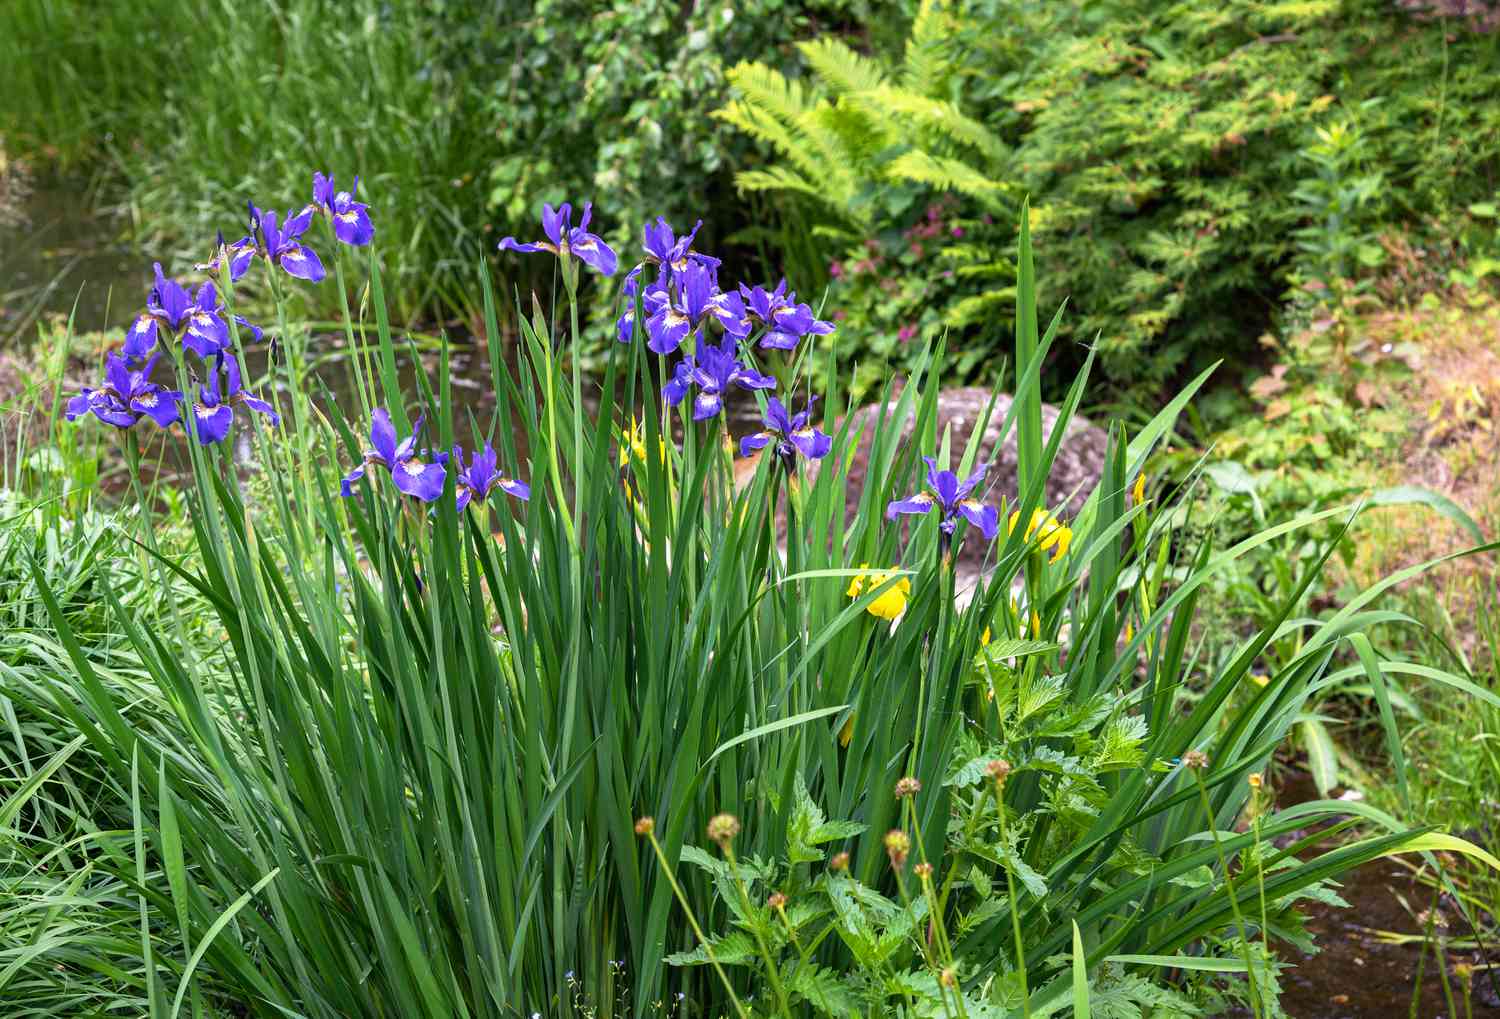 Siberian iris with purple flowers on tall stems in bog garden